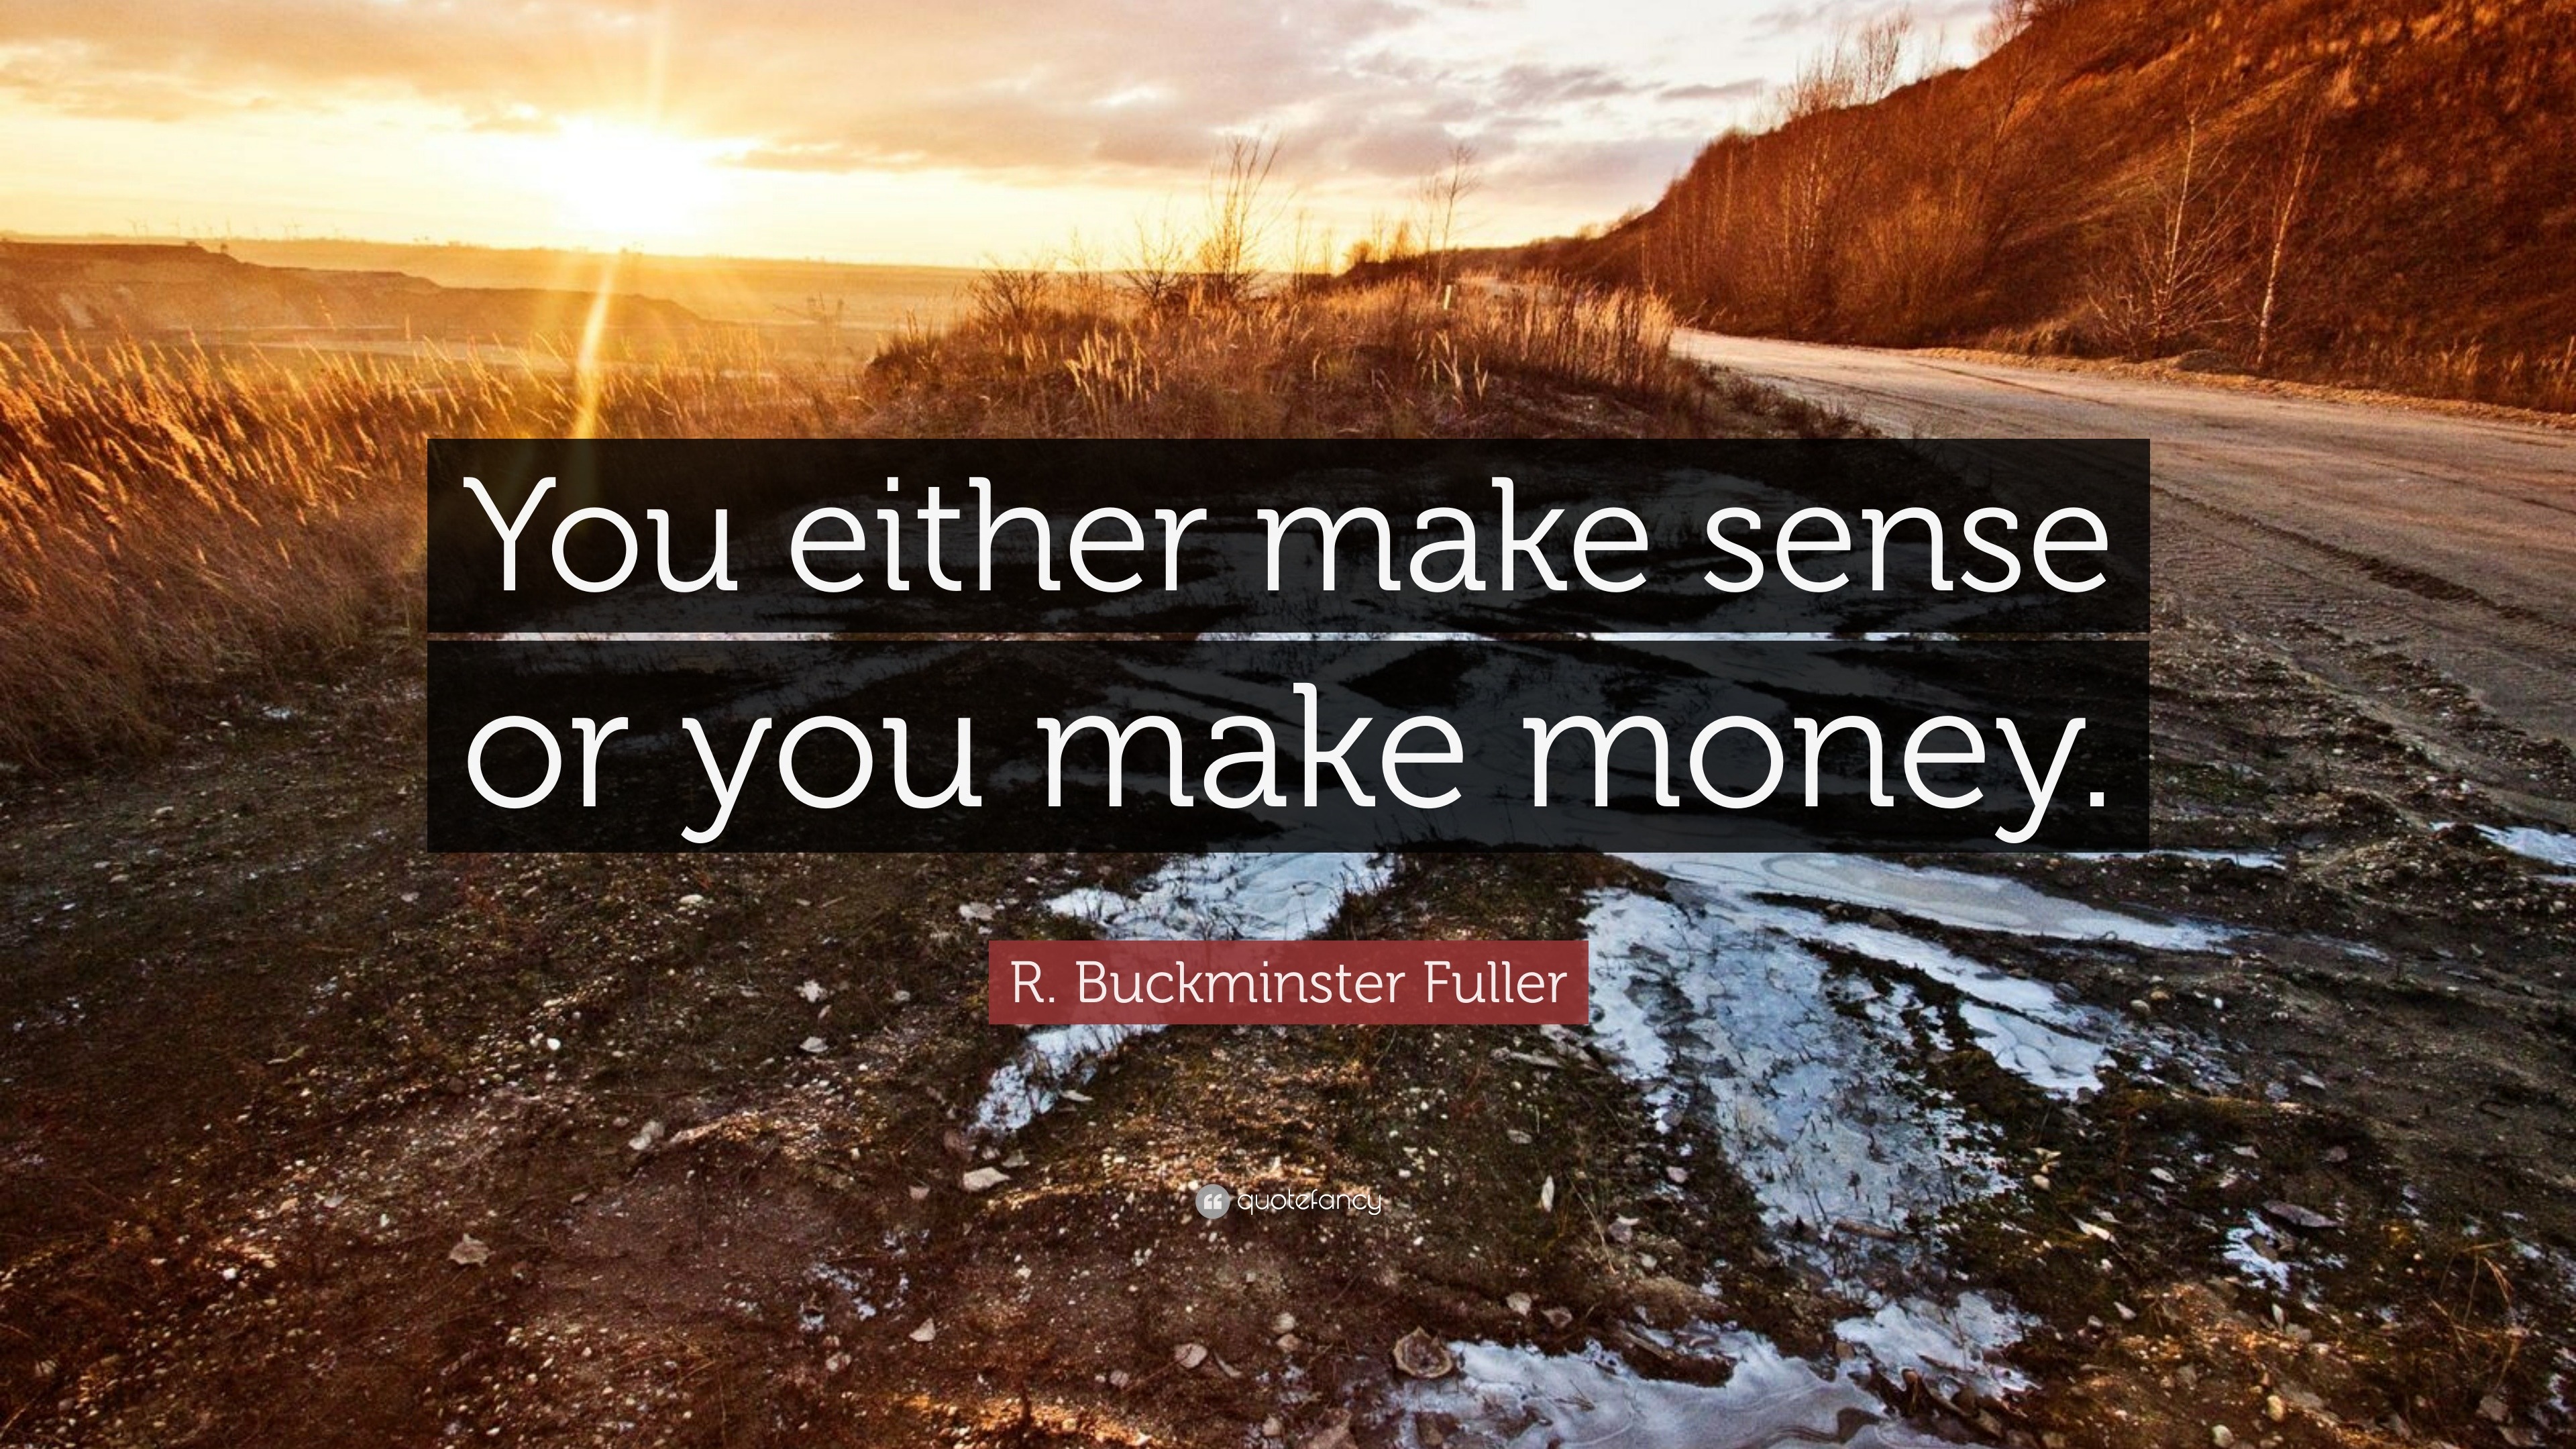 R. Buckminster Fuller Quote: “You either make sense or you make money.”